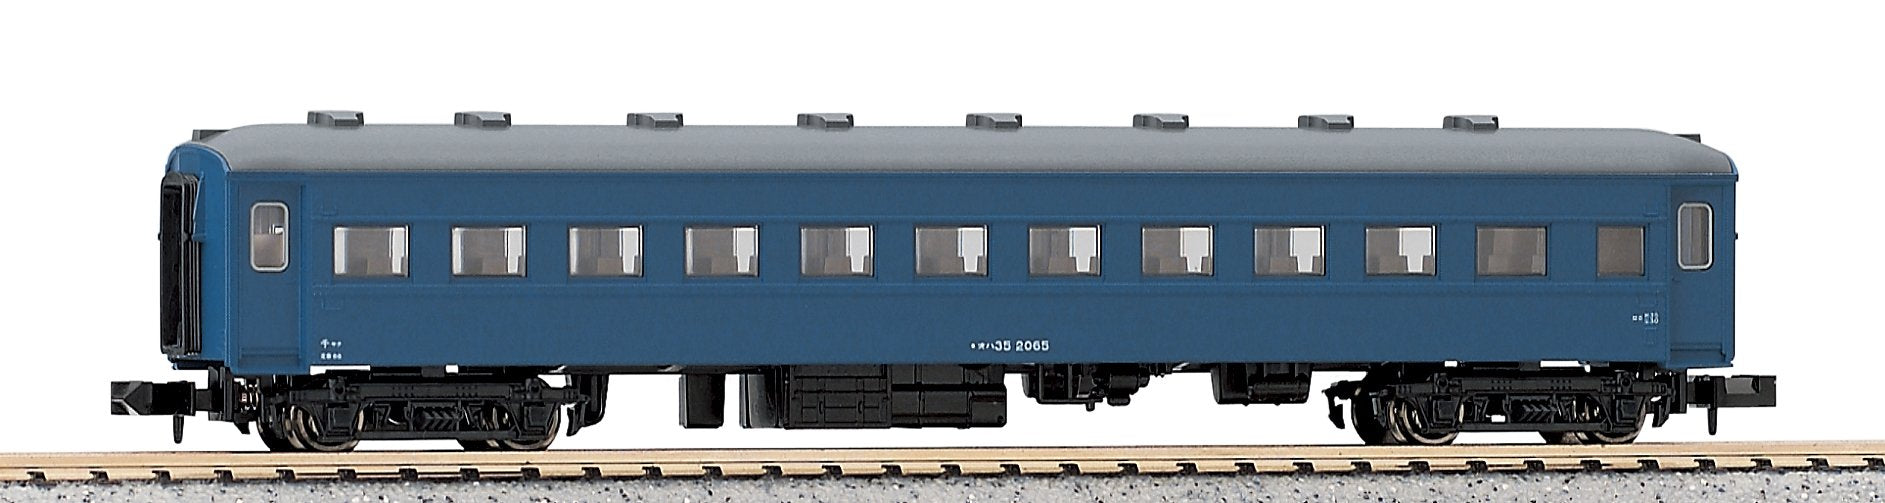 Kato Blue Oha35 Model - N Gauge 5127-2 General Railway Passenger Car